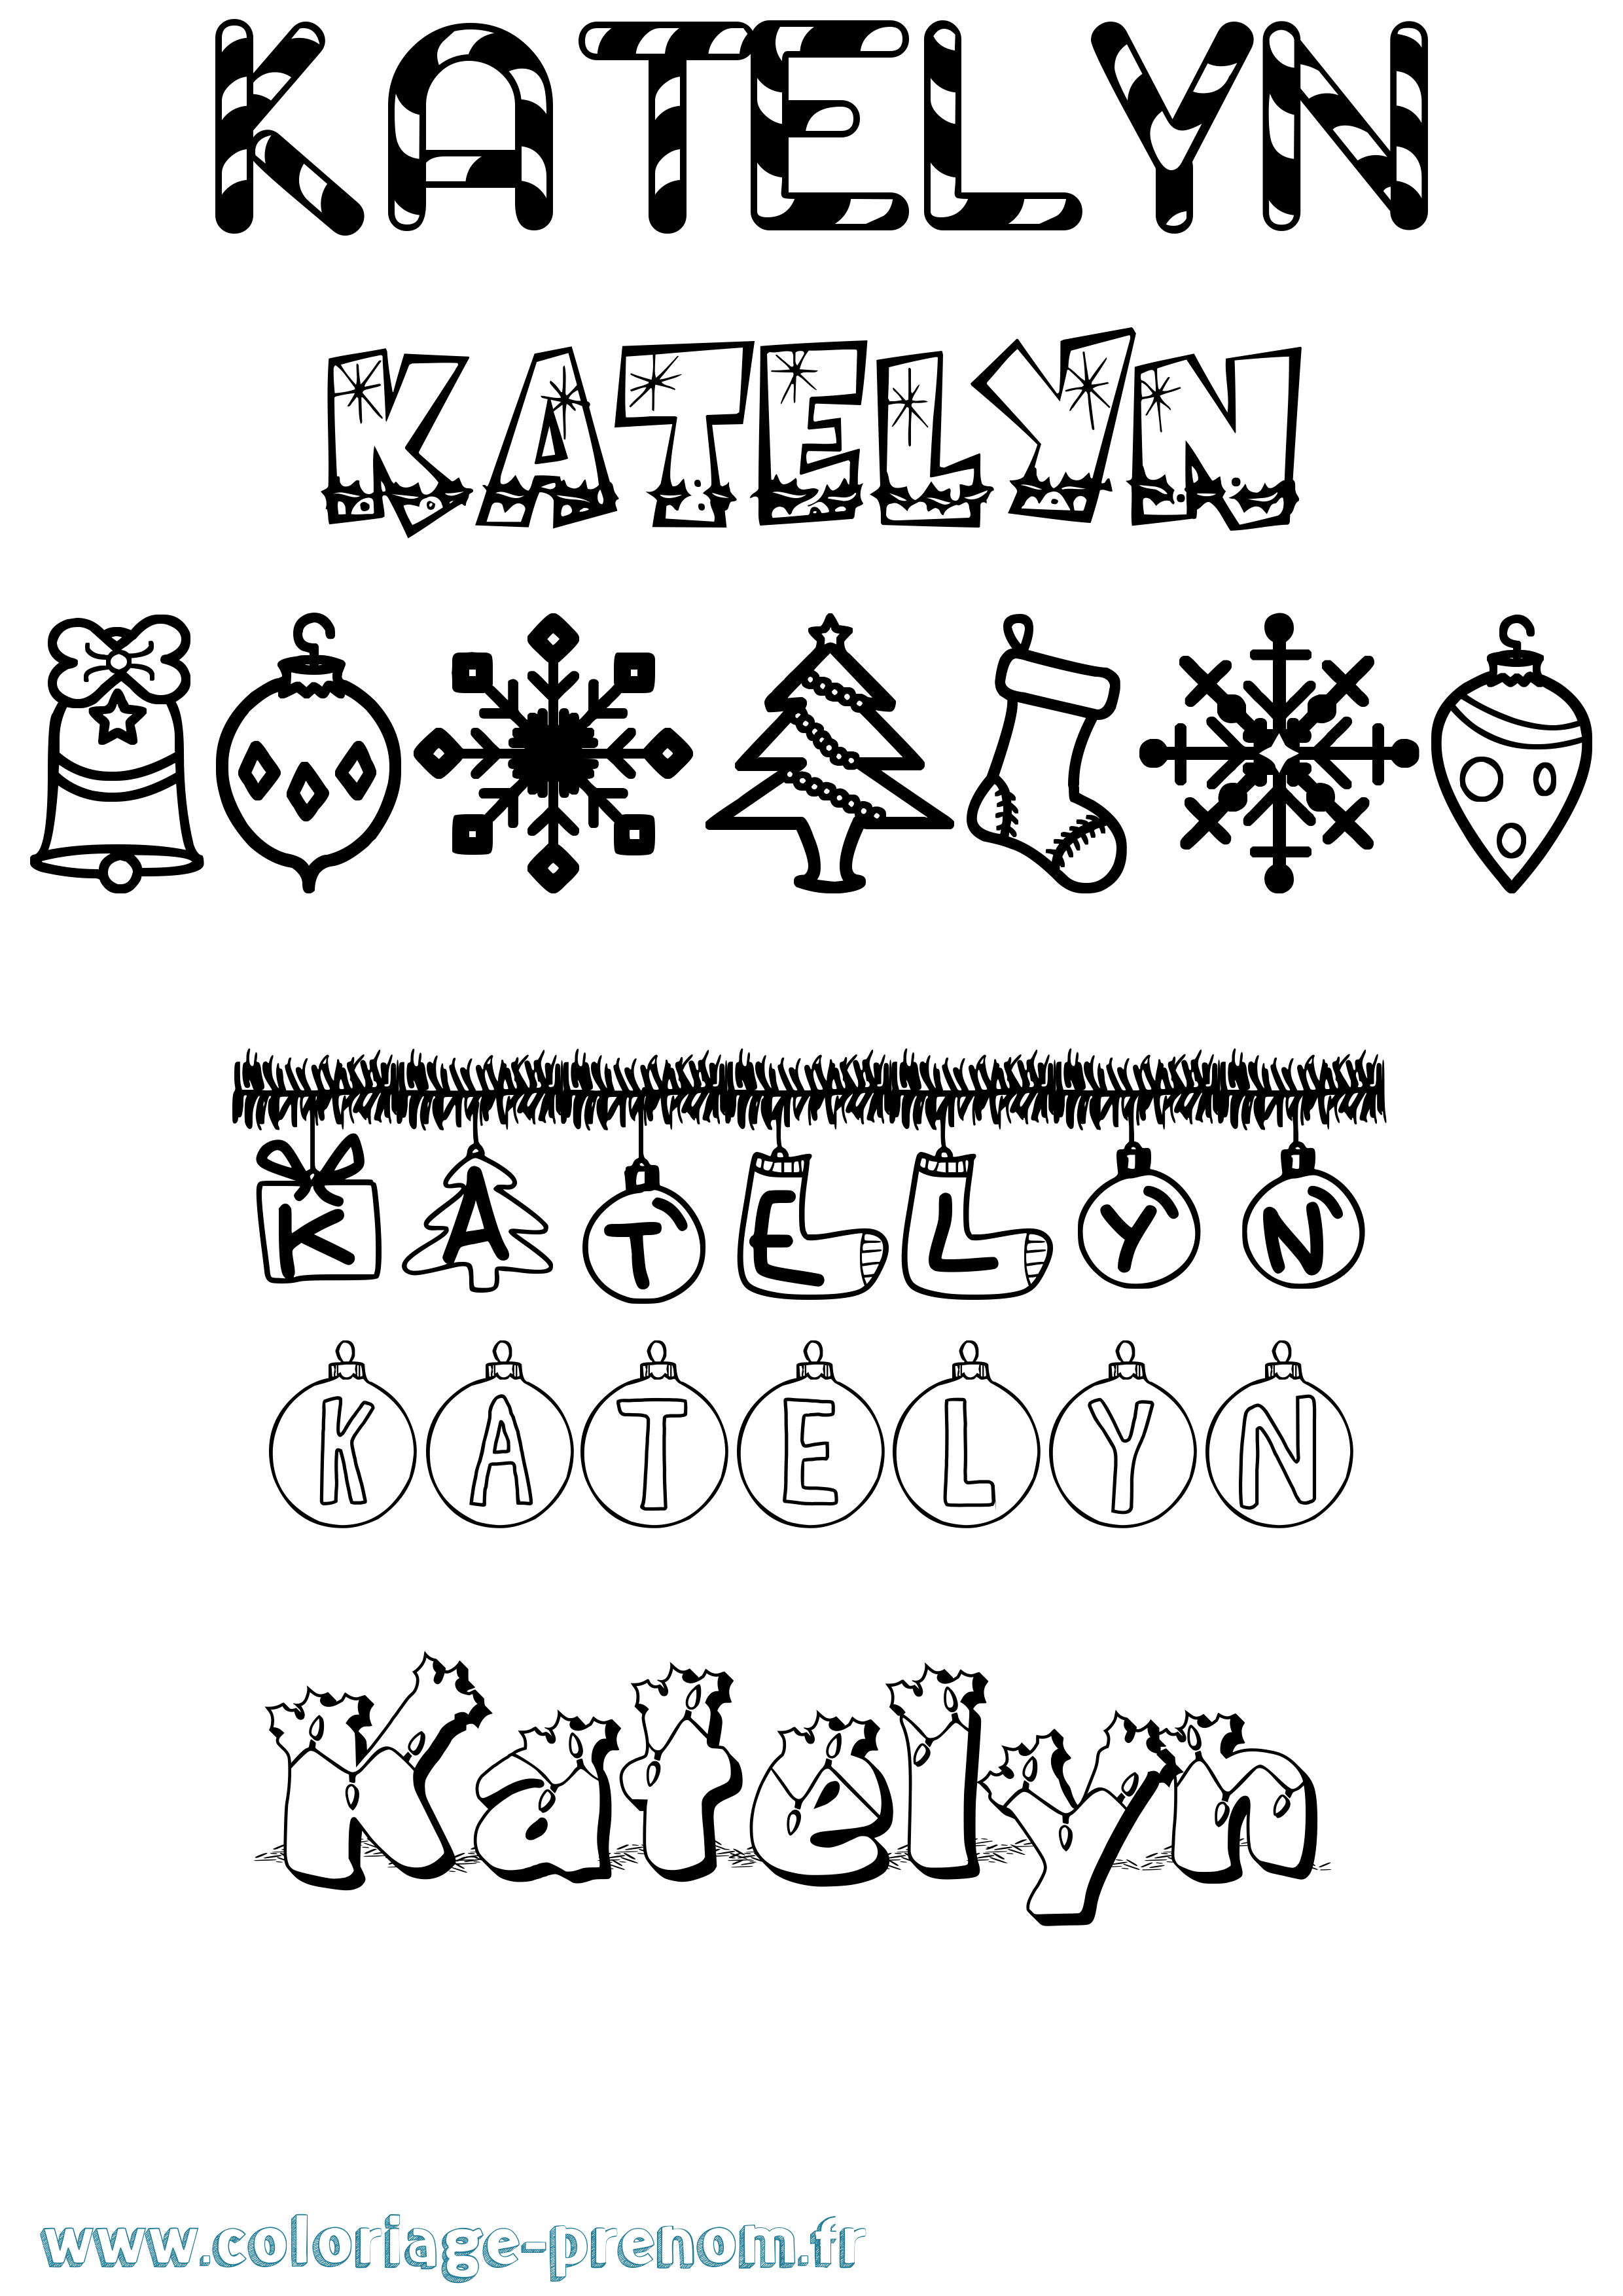 Coloriage prénom Katelyn Noël